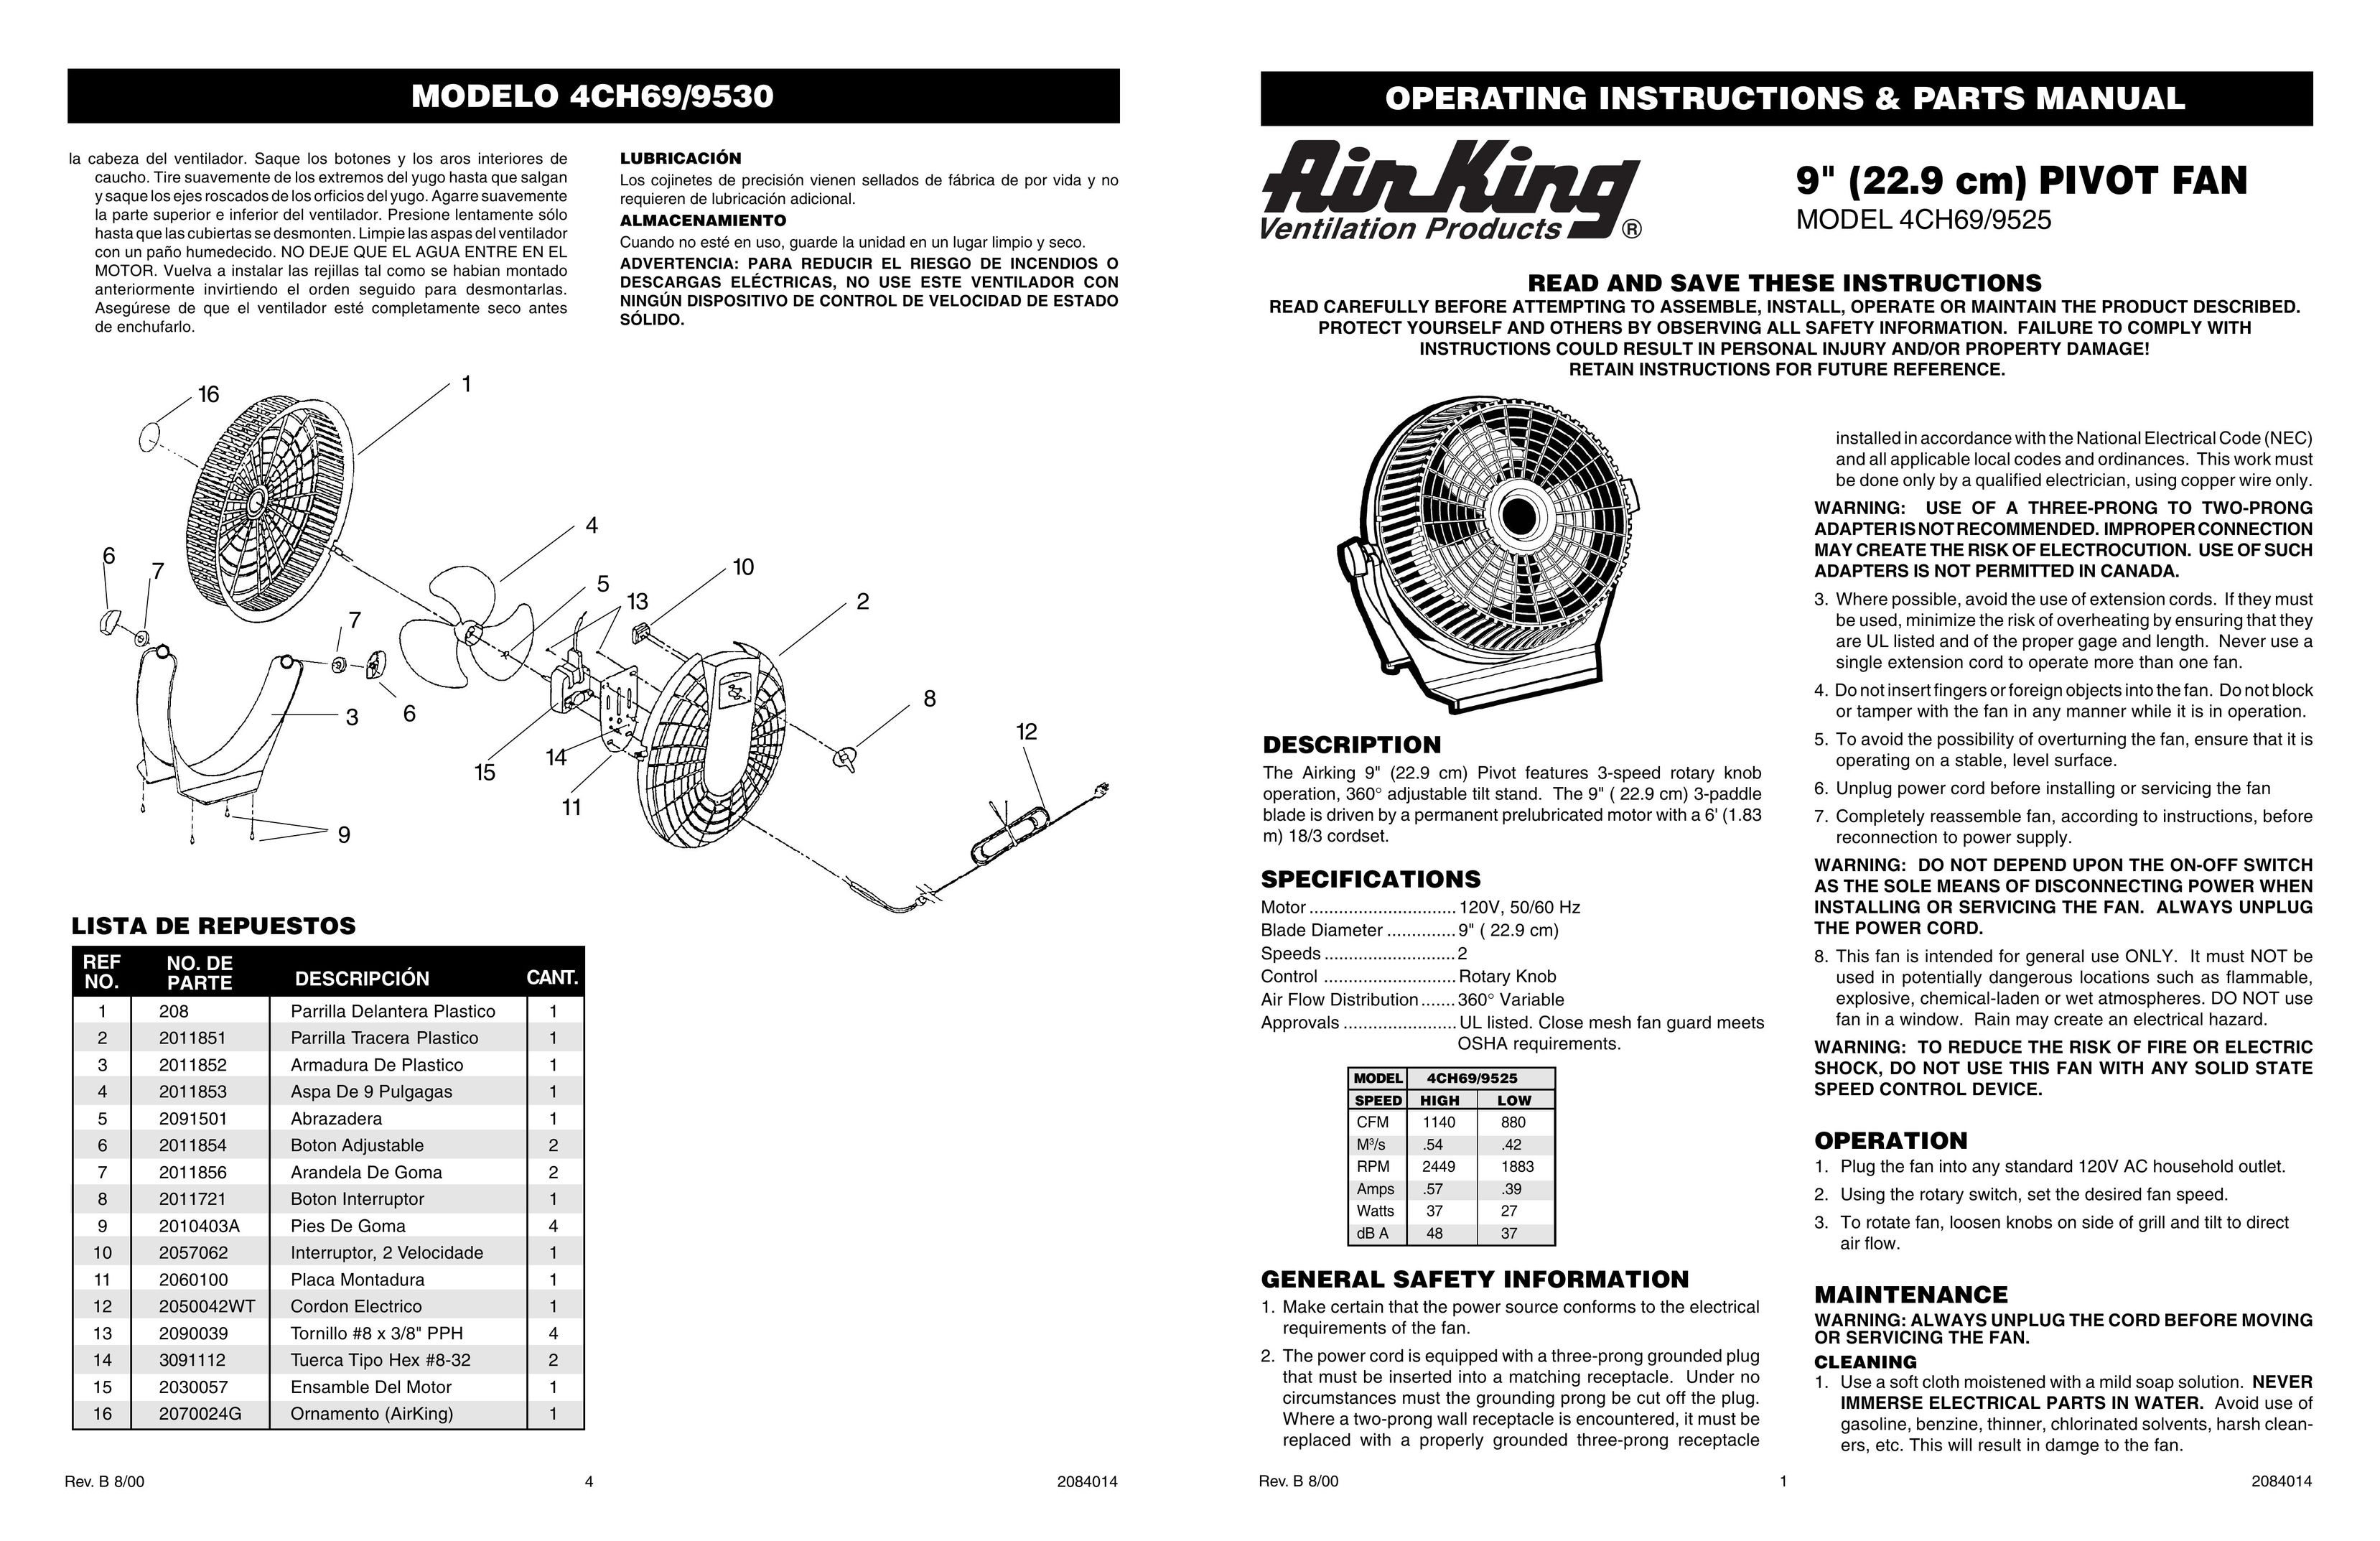 Air King 4CH69/9525 Fan User Manual